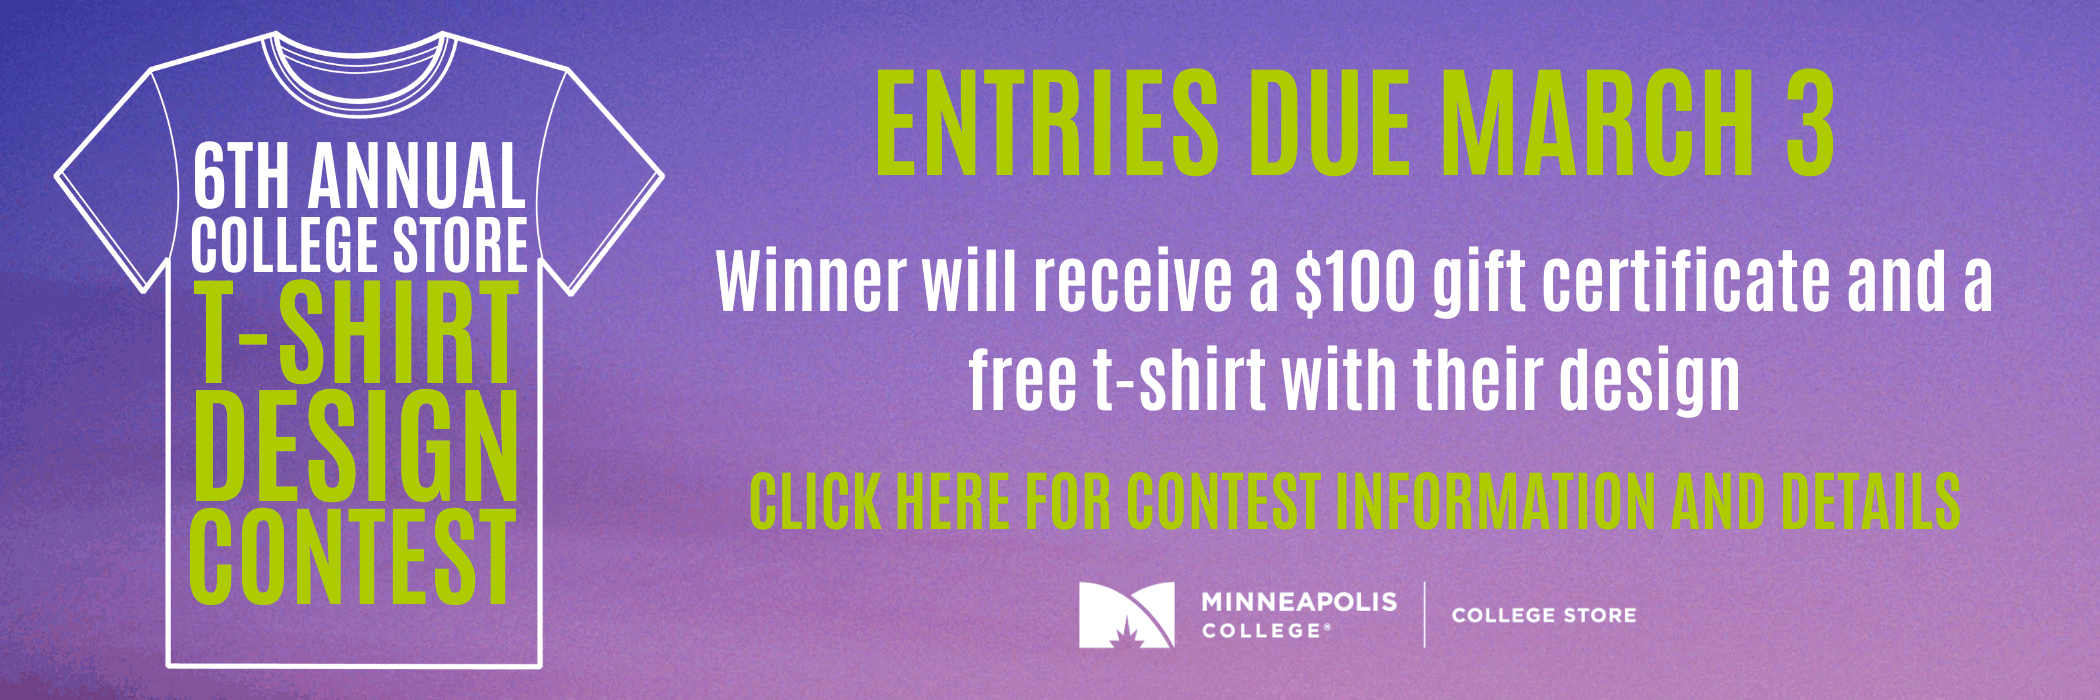 6th annual College Store t-shirt design contest